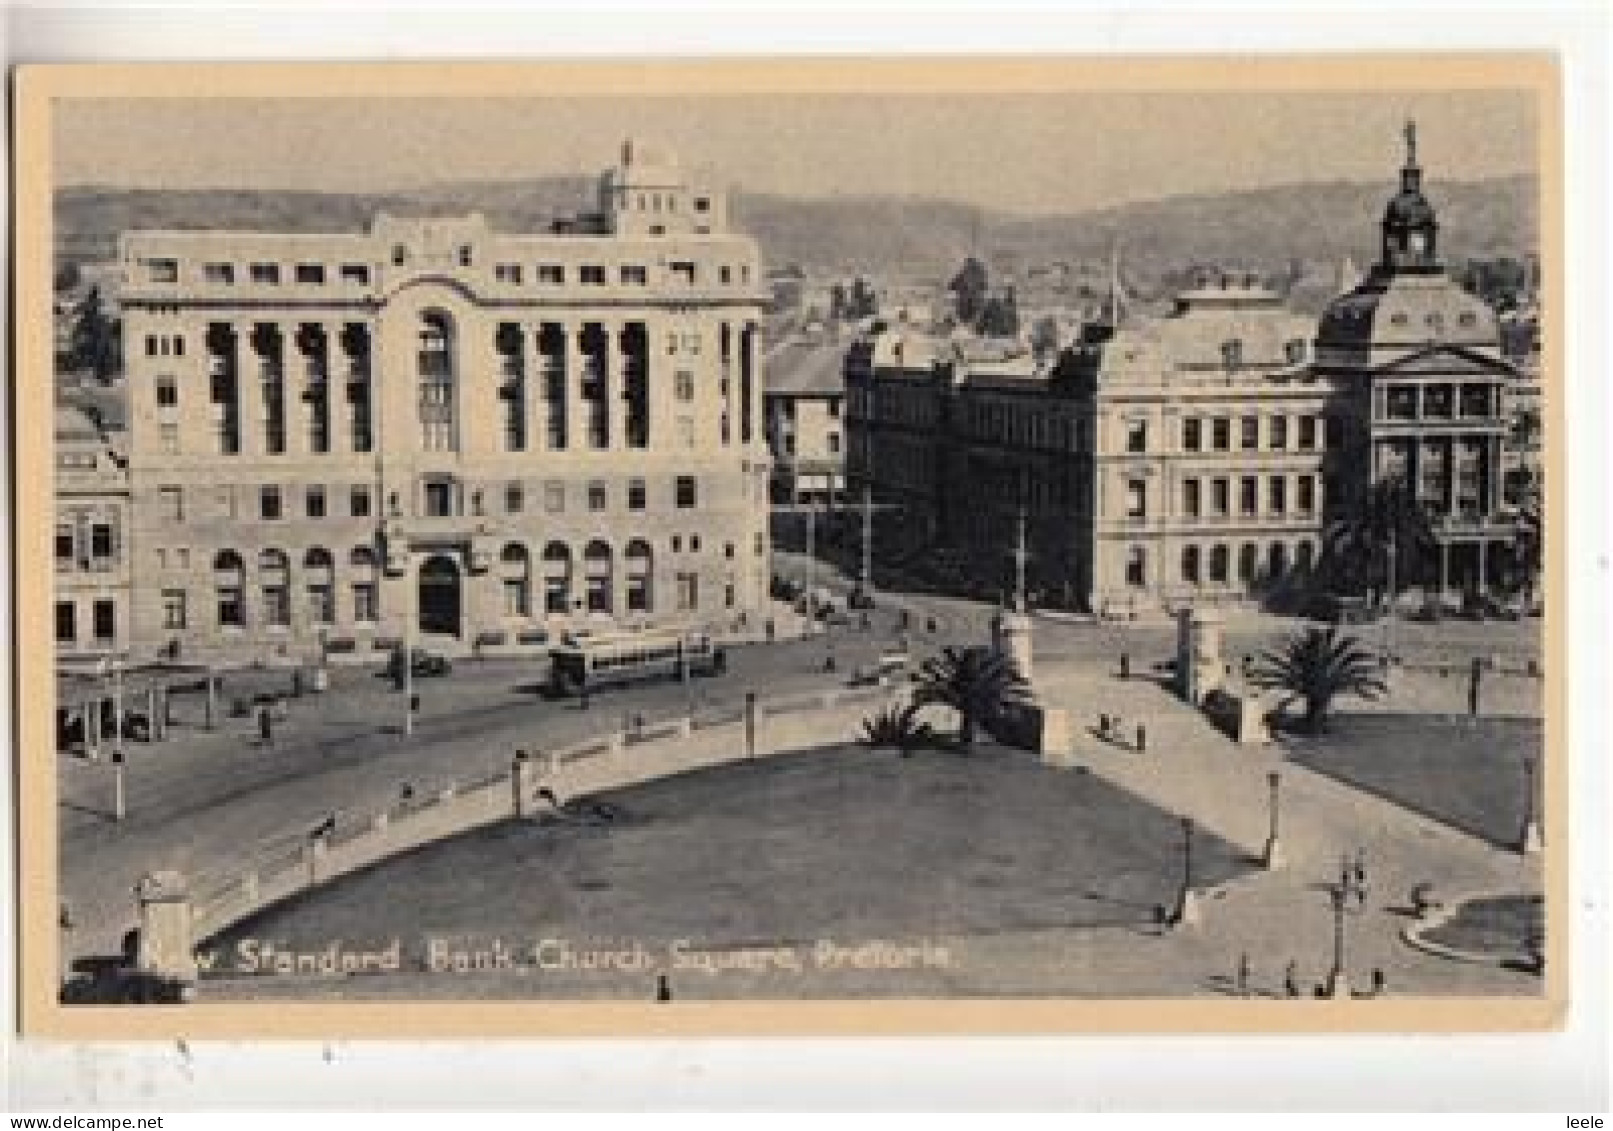 D22.  Vintage Postcard. New Standard Bank, Church Square, Pretoria. South Africa. - Sud Africa